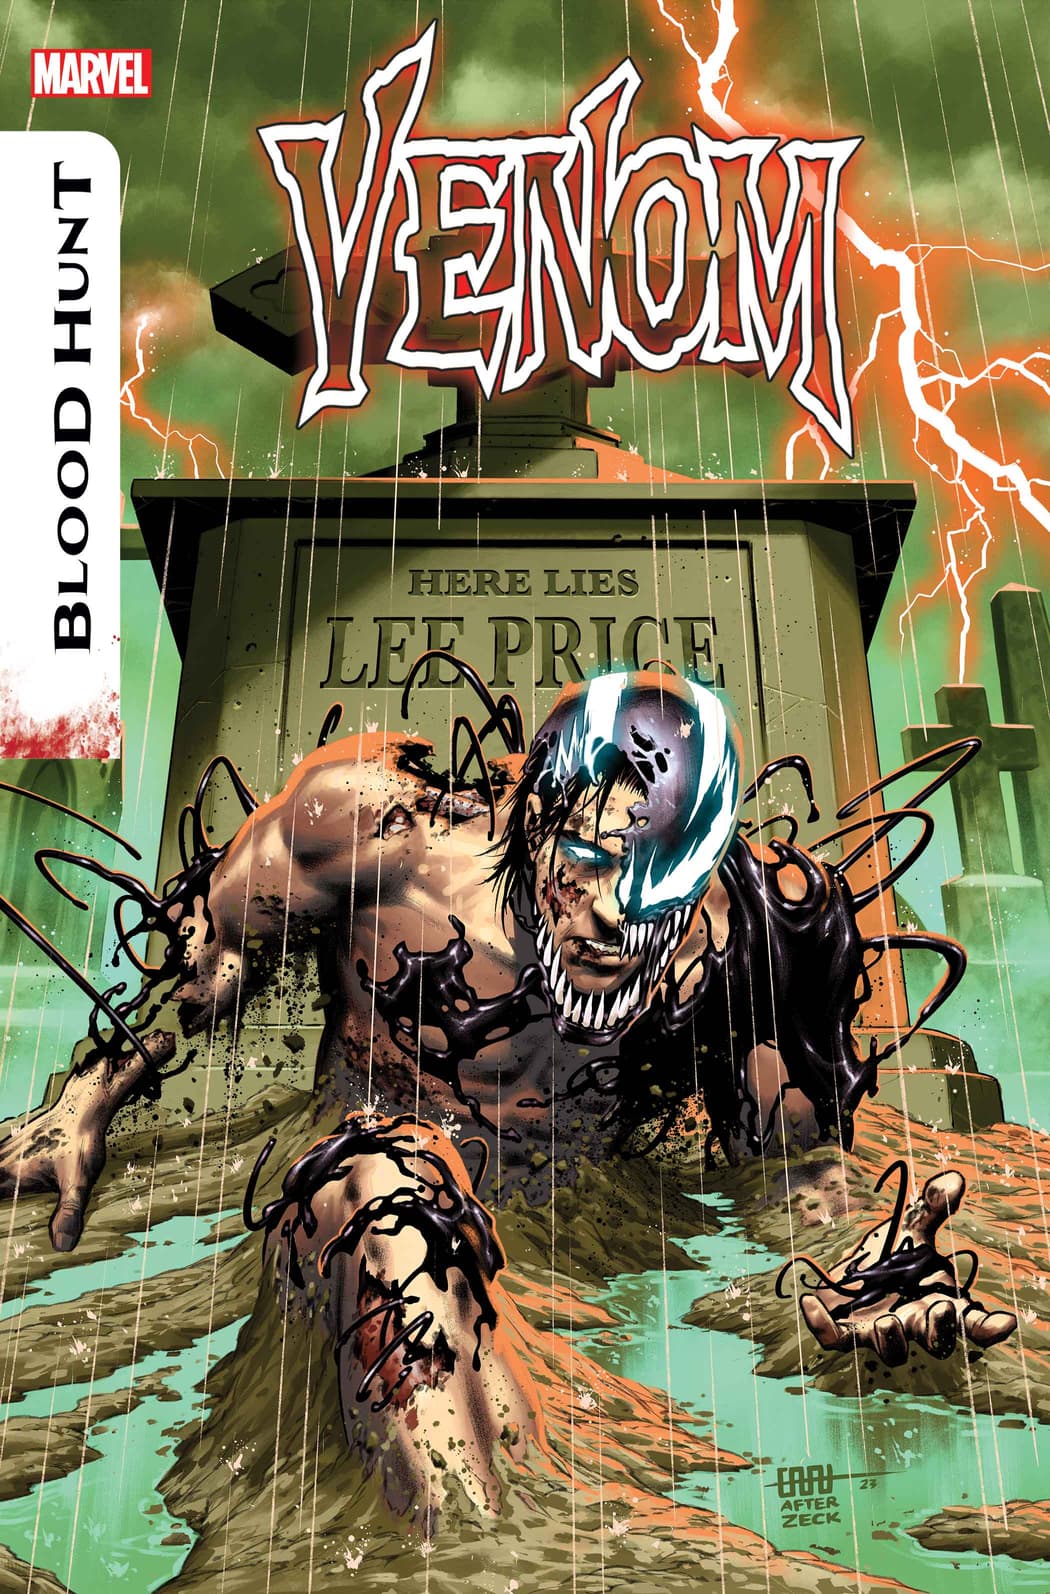 Venom #33 cover art